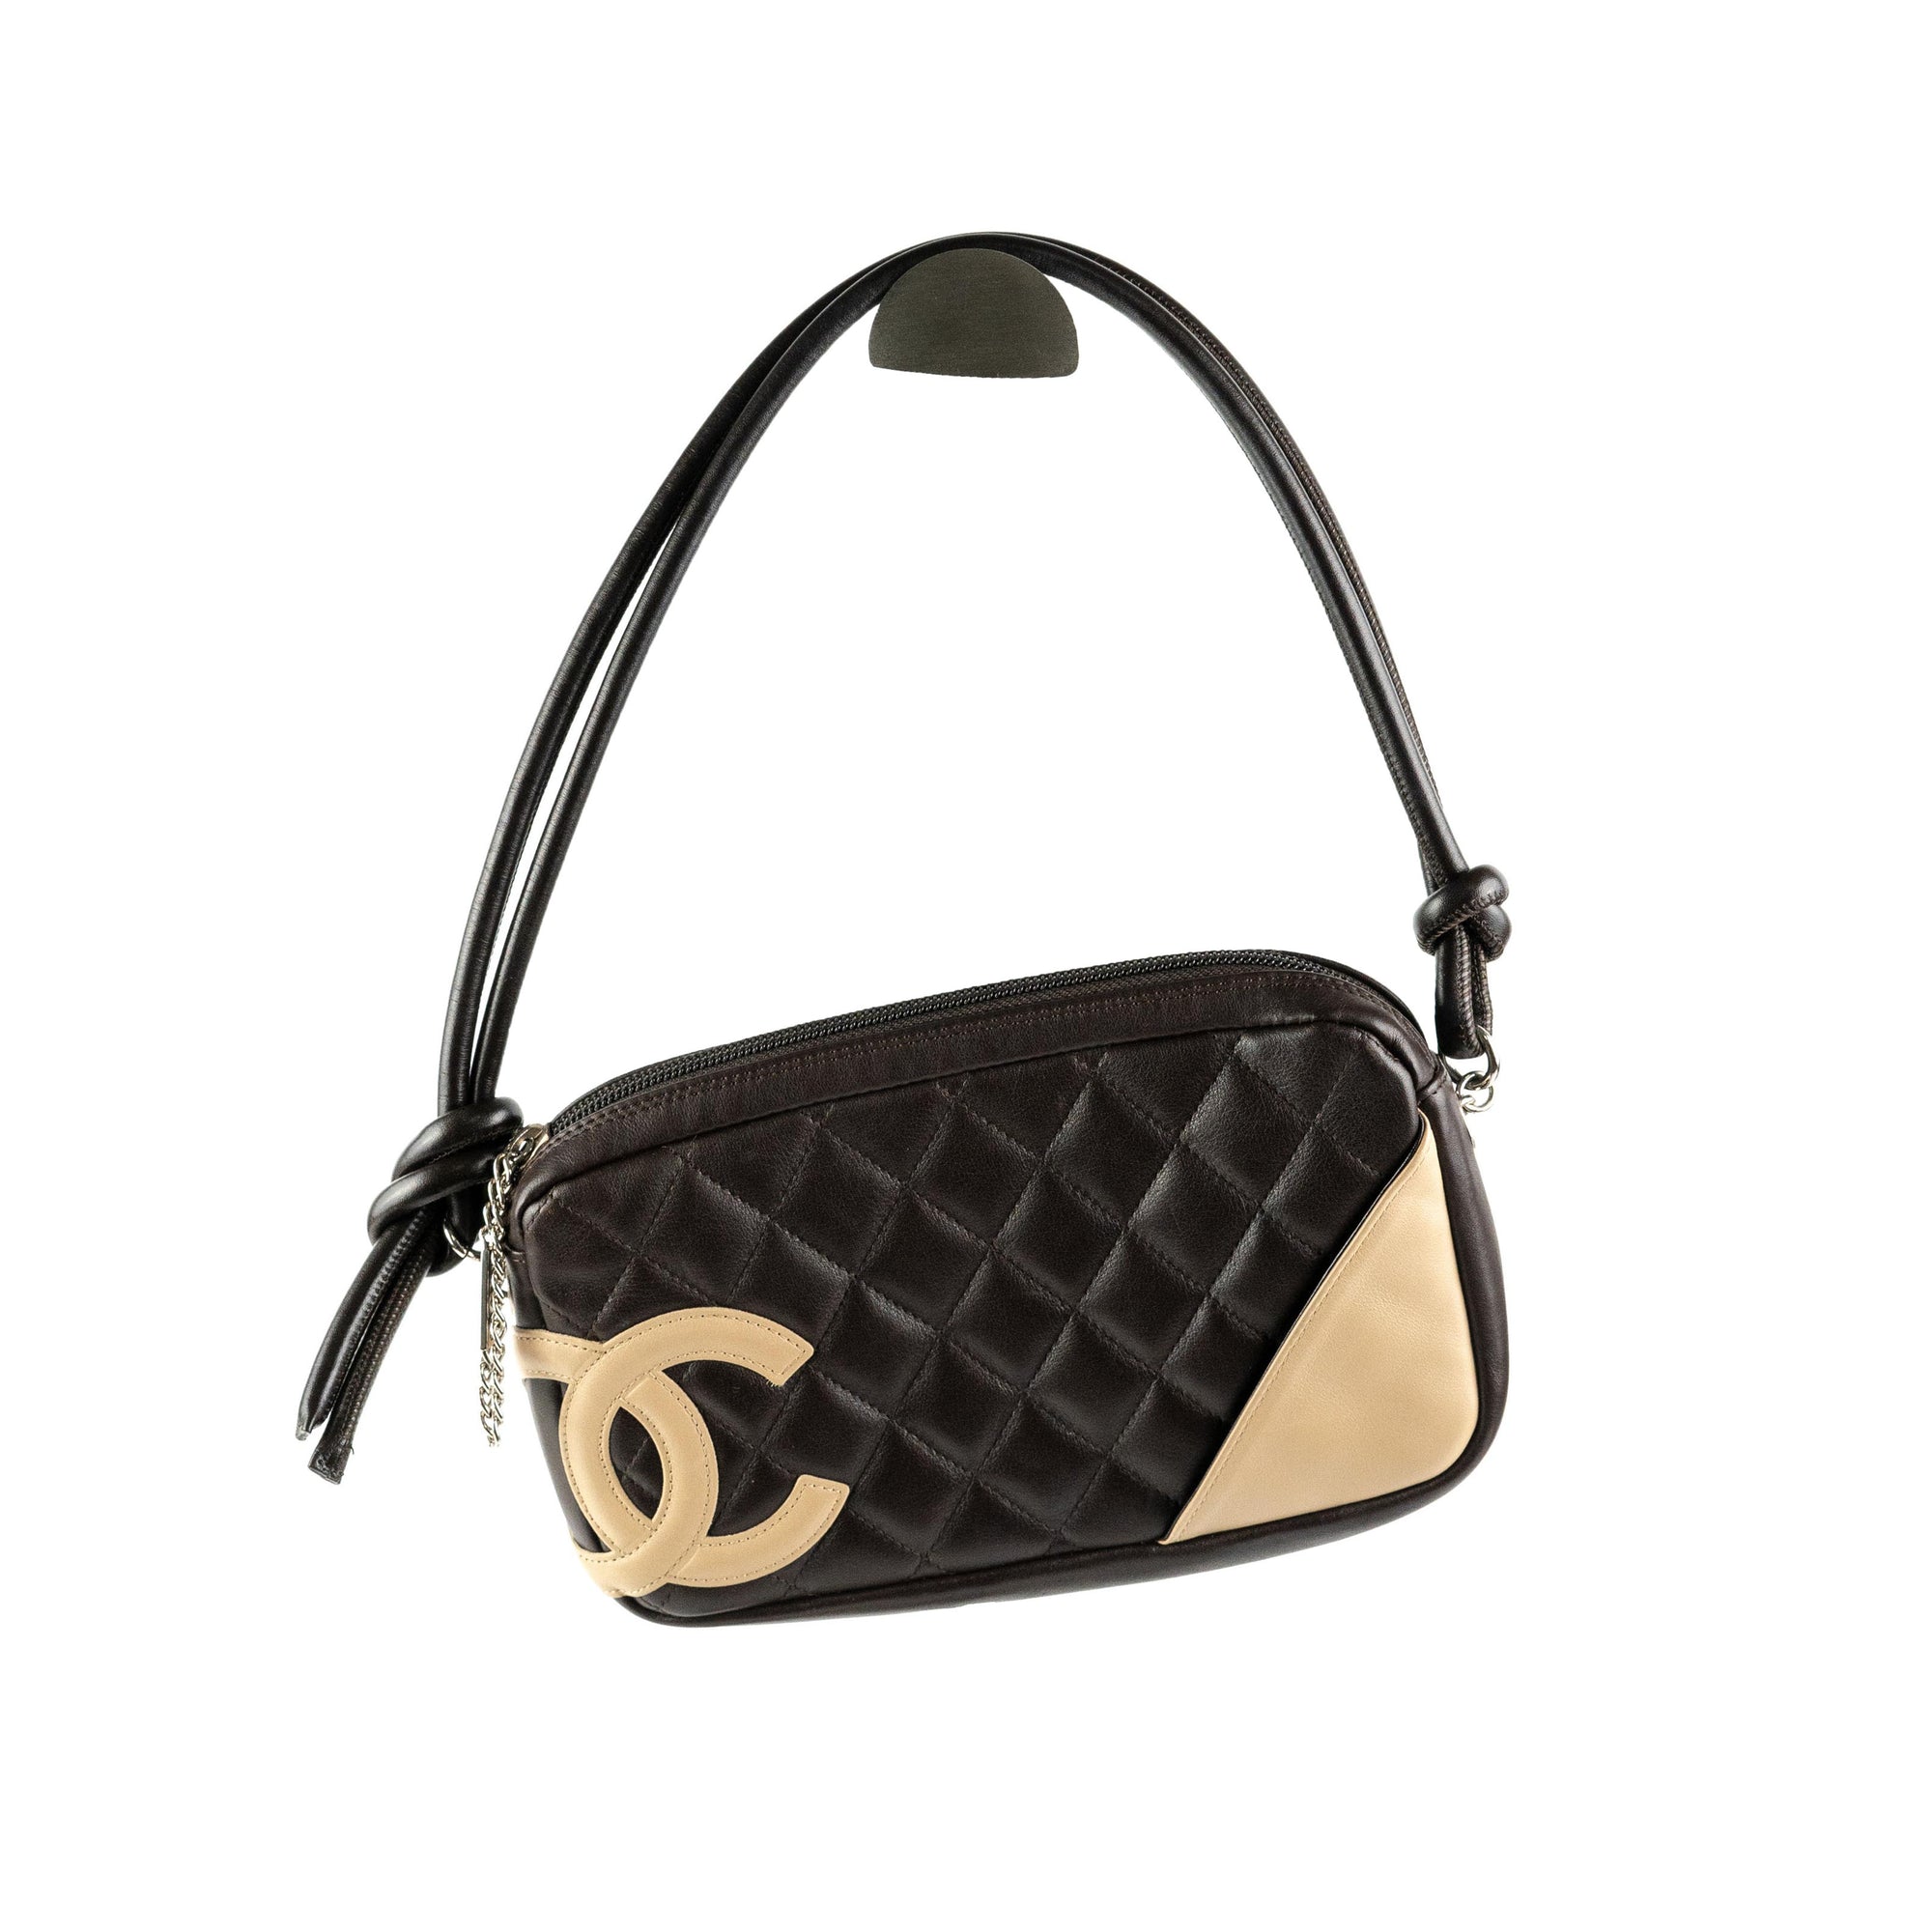 Chanel BeigeBlack Quilted Leather Large Ligne Cambon Tote Bag Chanel  TLC